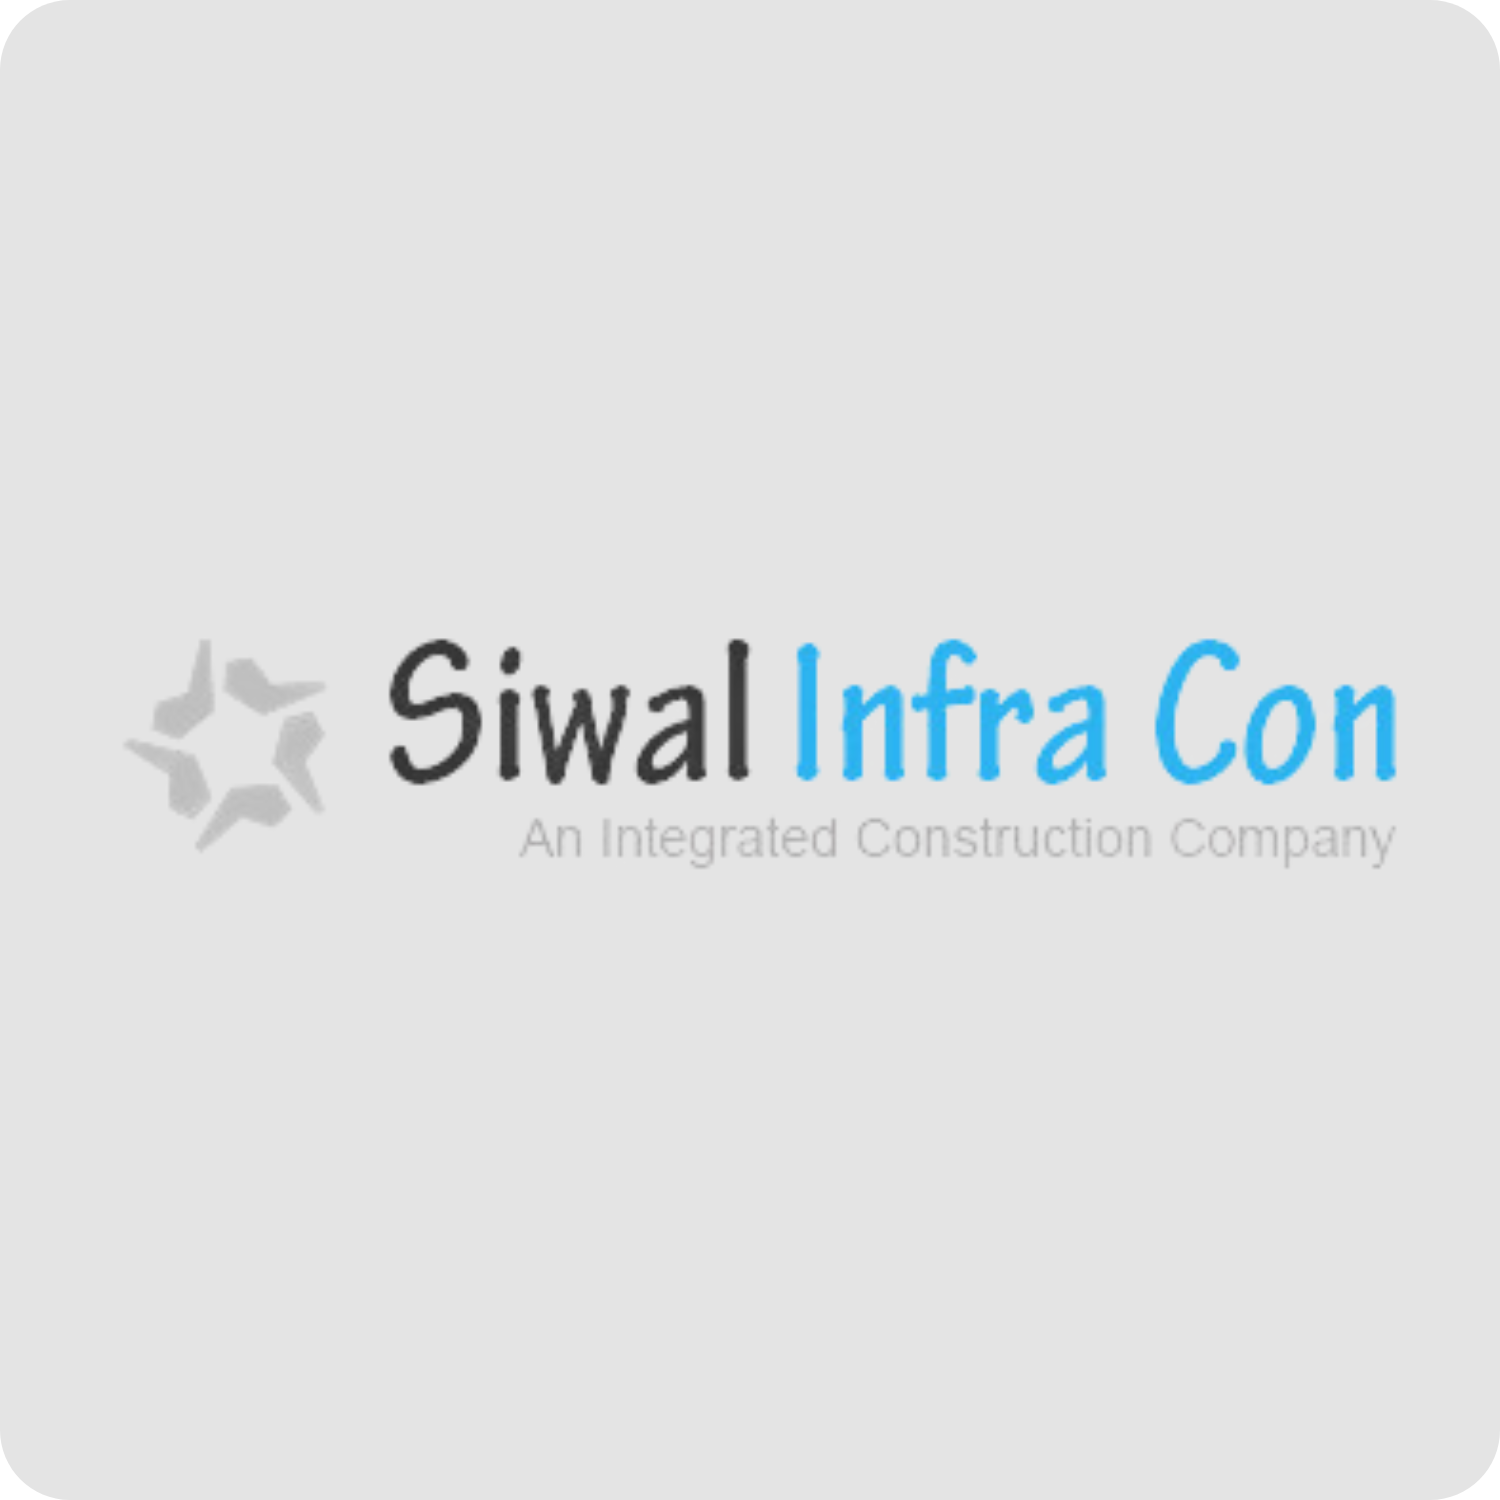 Agoan Client Siwal Infra Con Logo